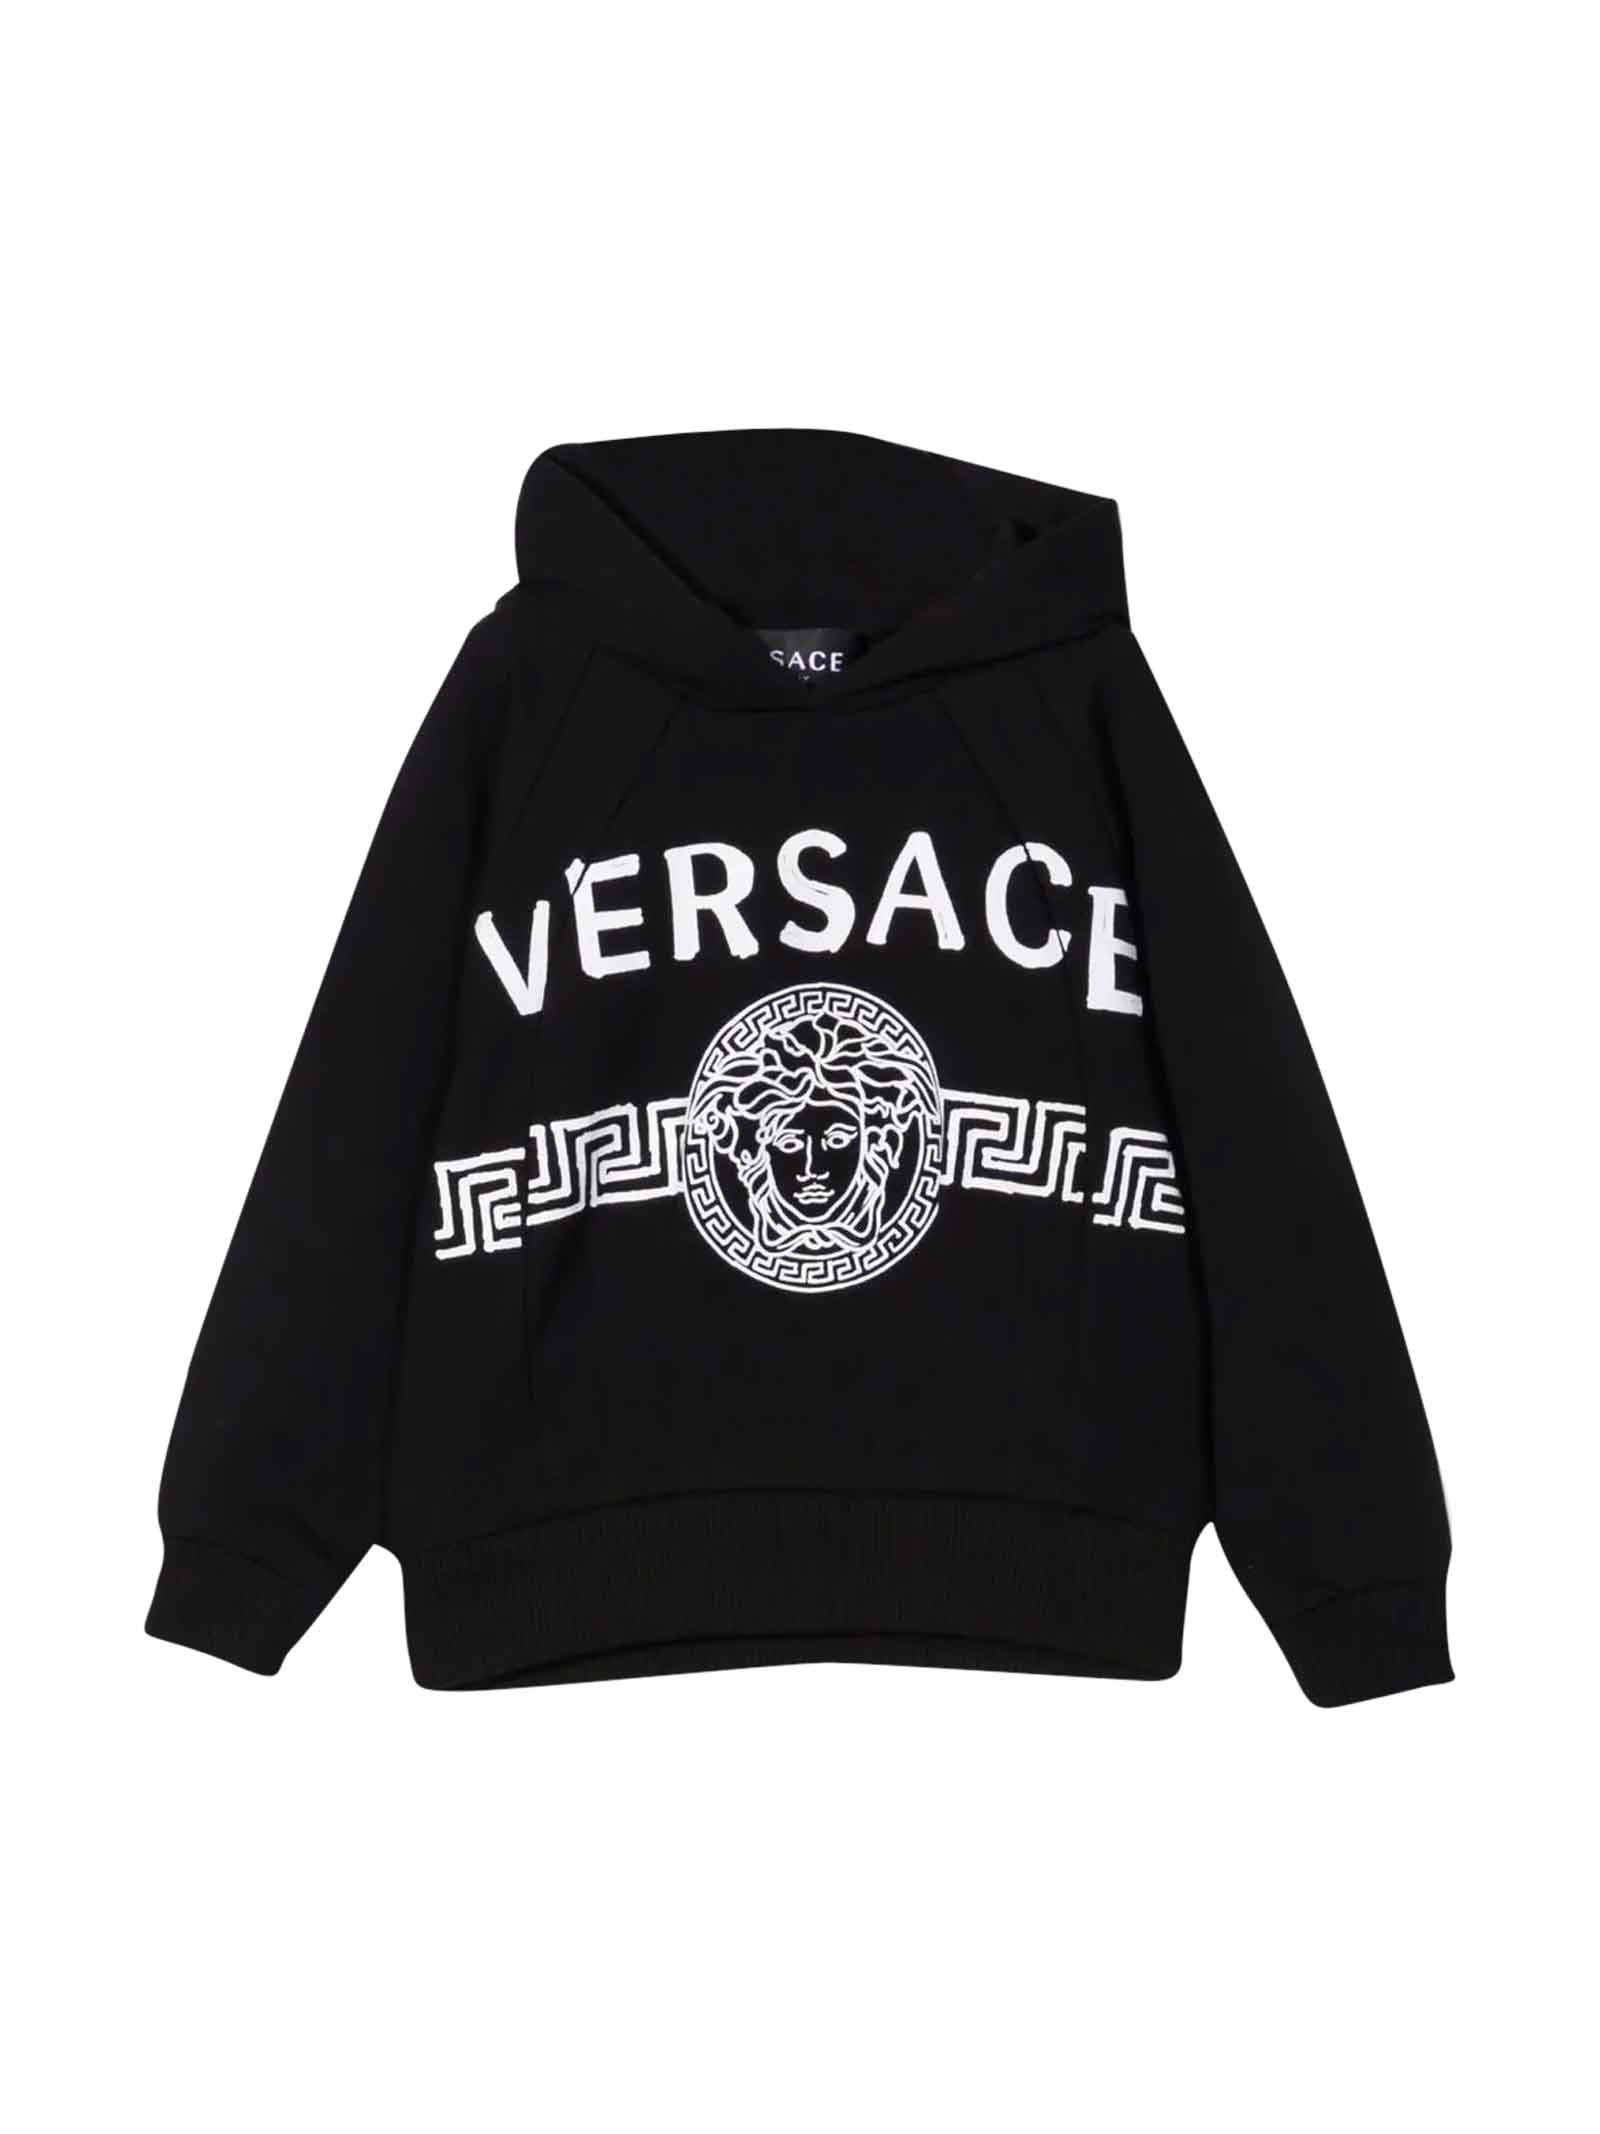 Versace Black Sweatshirt Unisex Kids